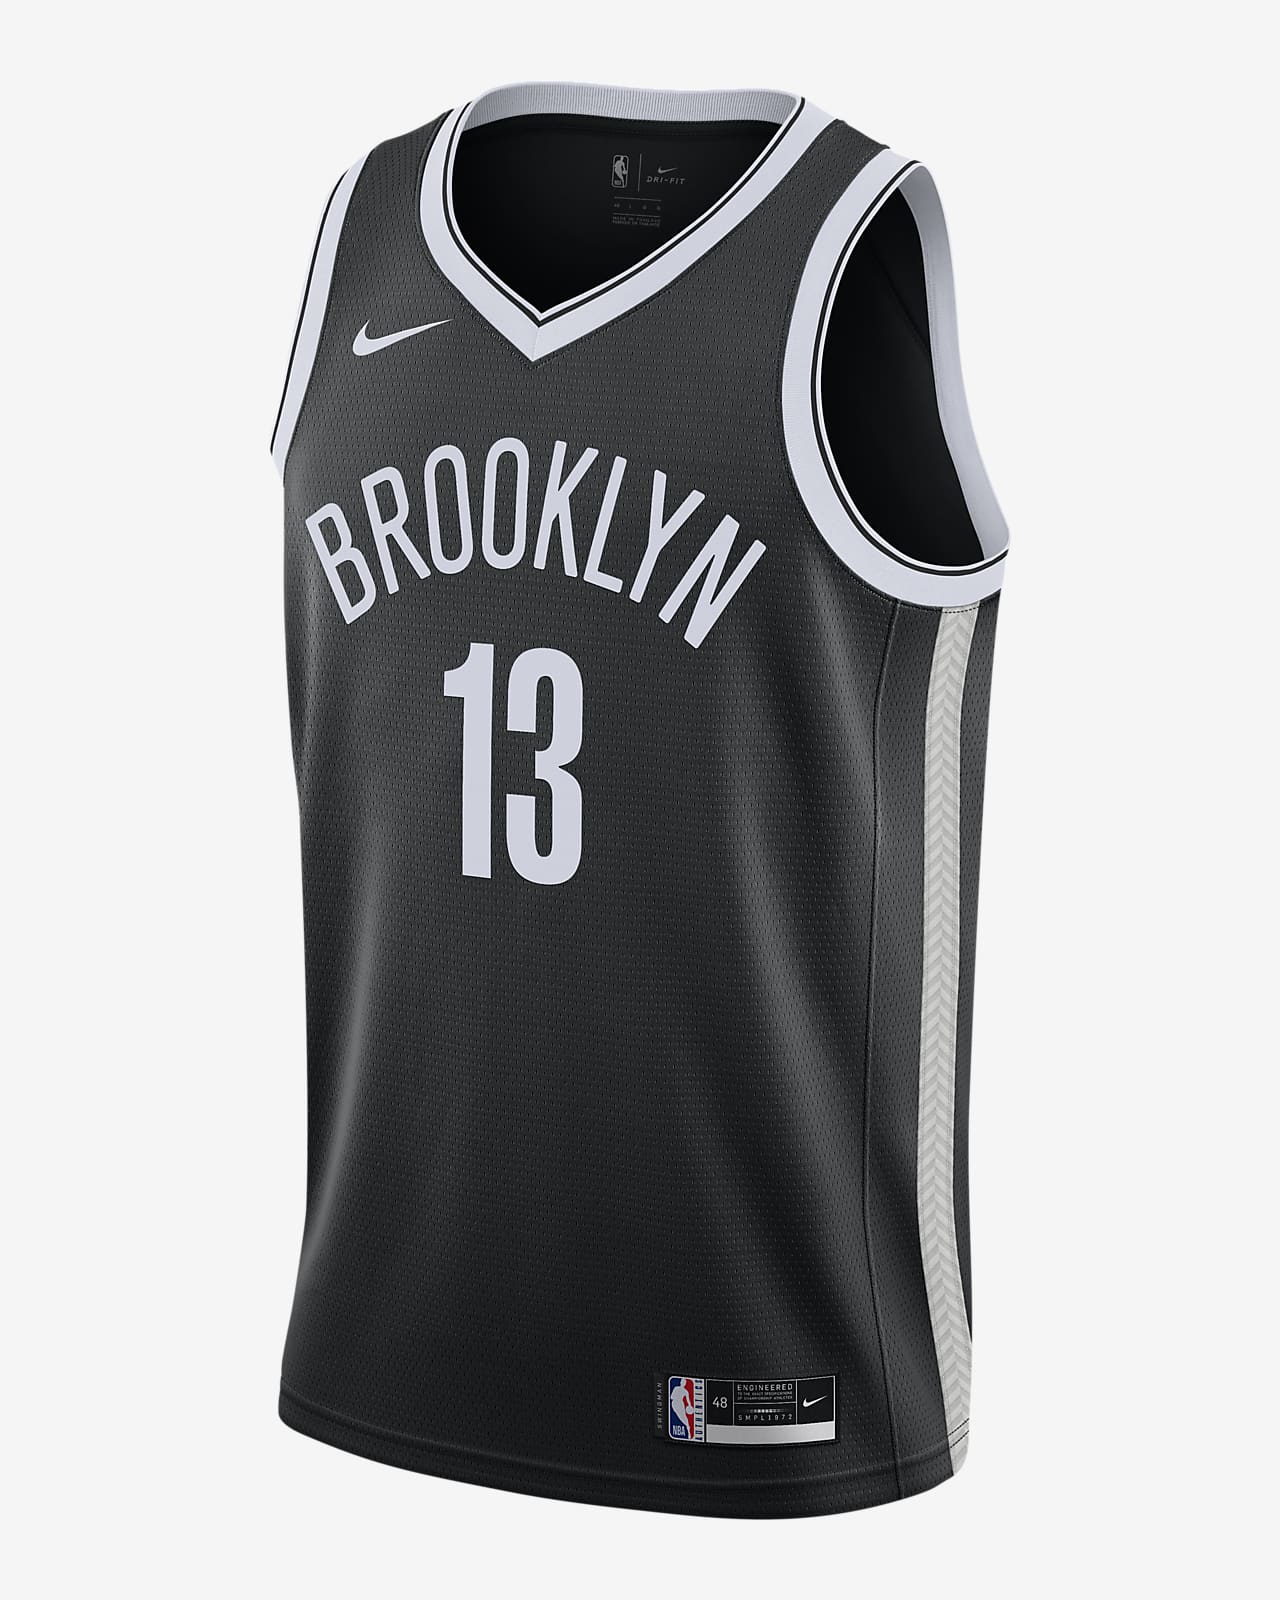 Nets Icon Edition 2020 Nike NBA Swingman Jersey